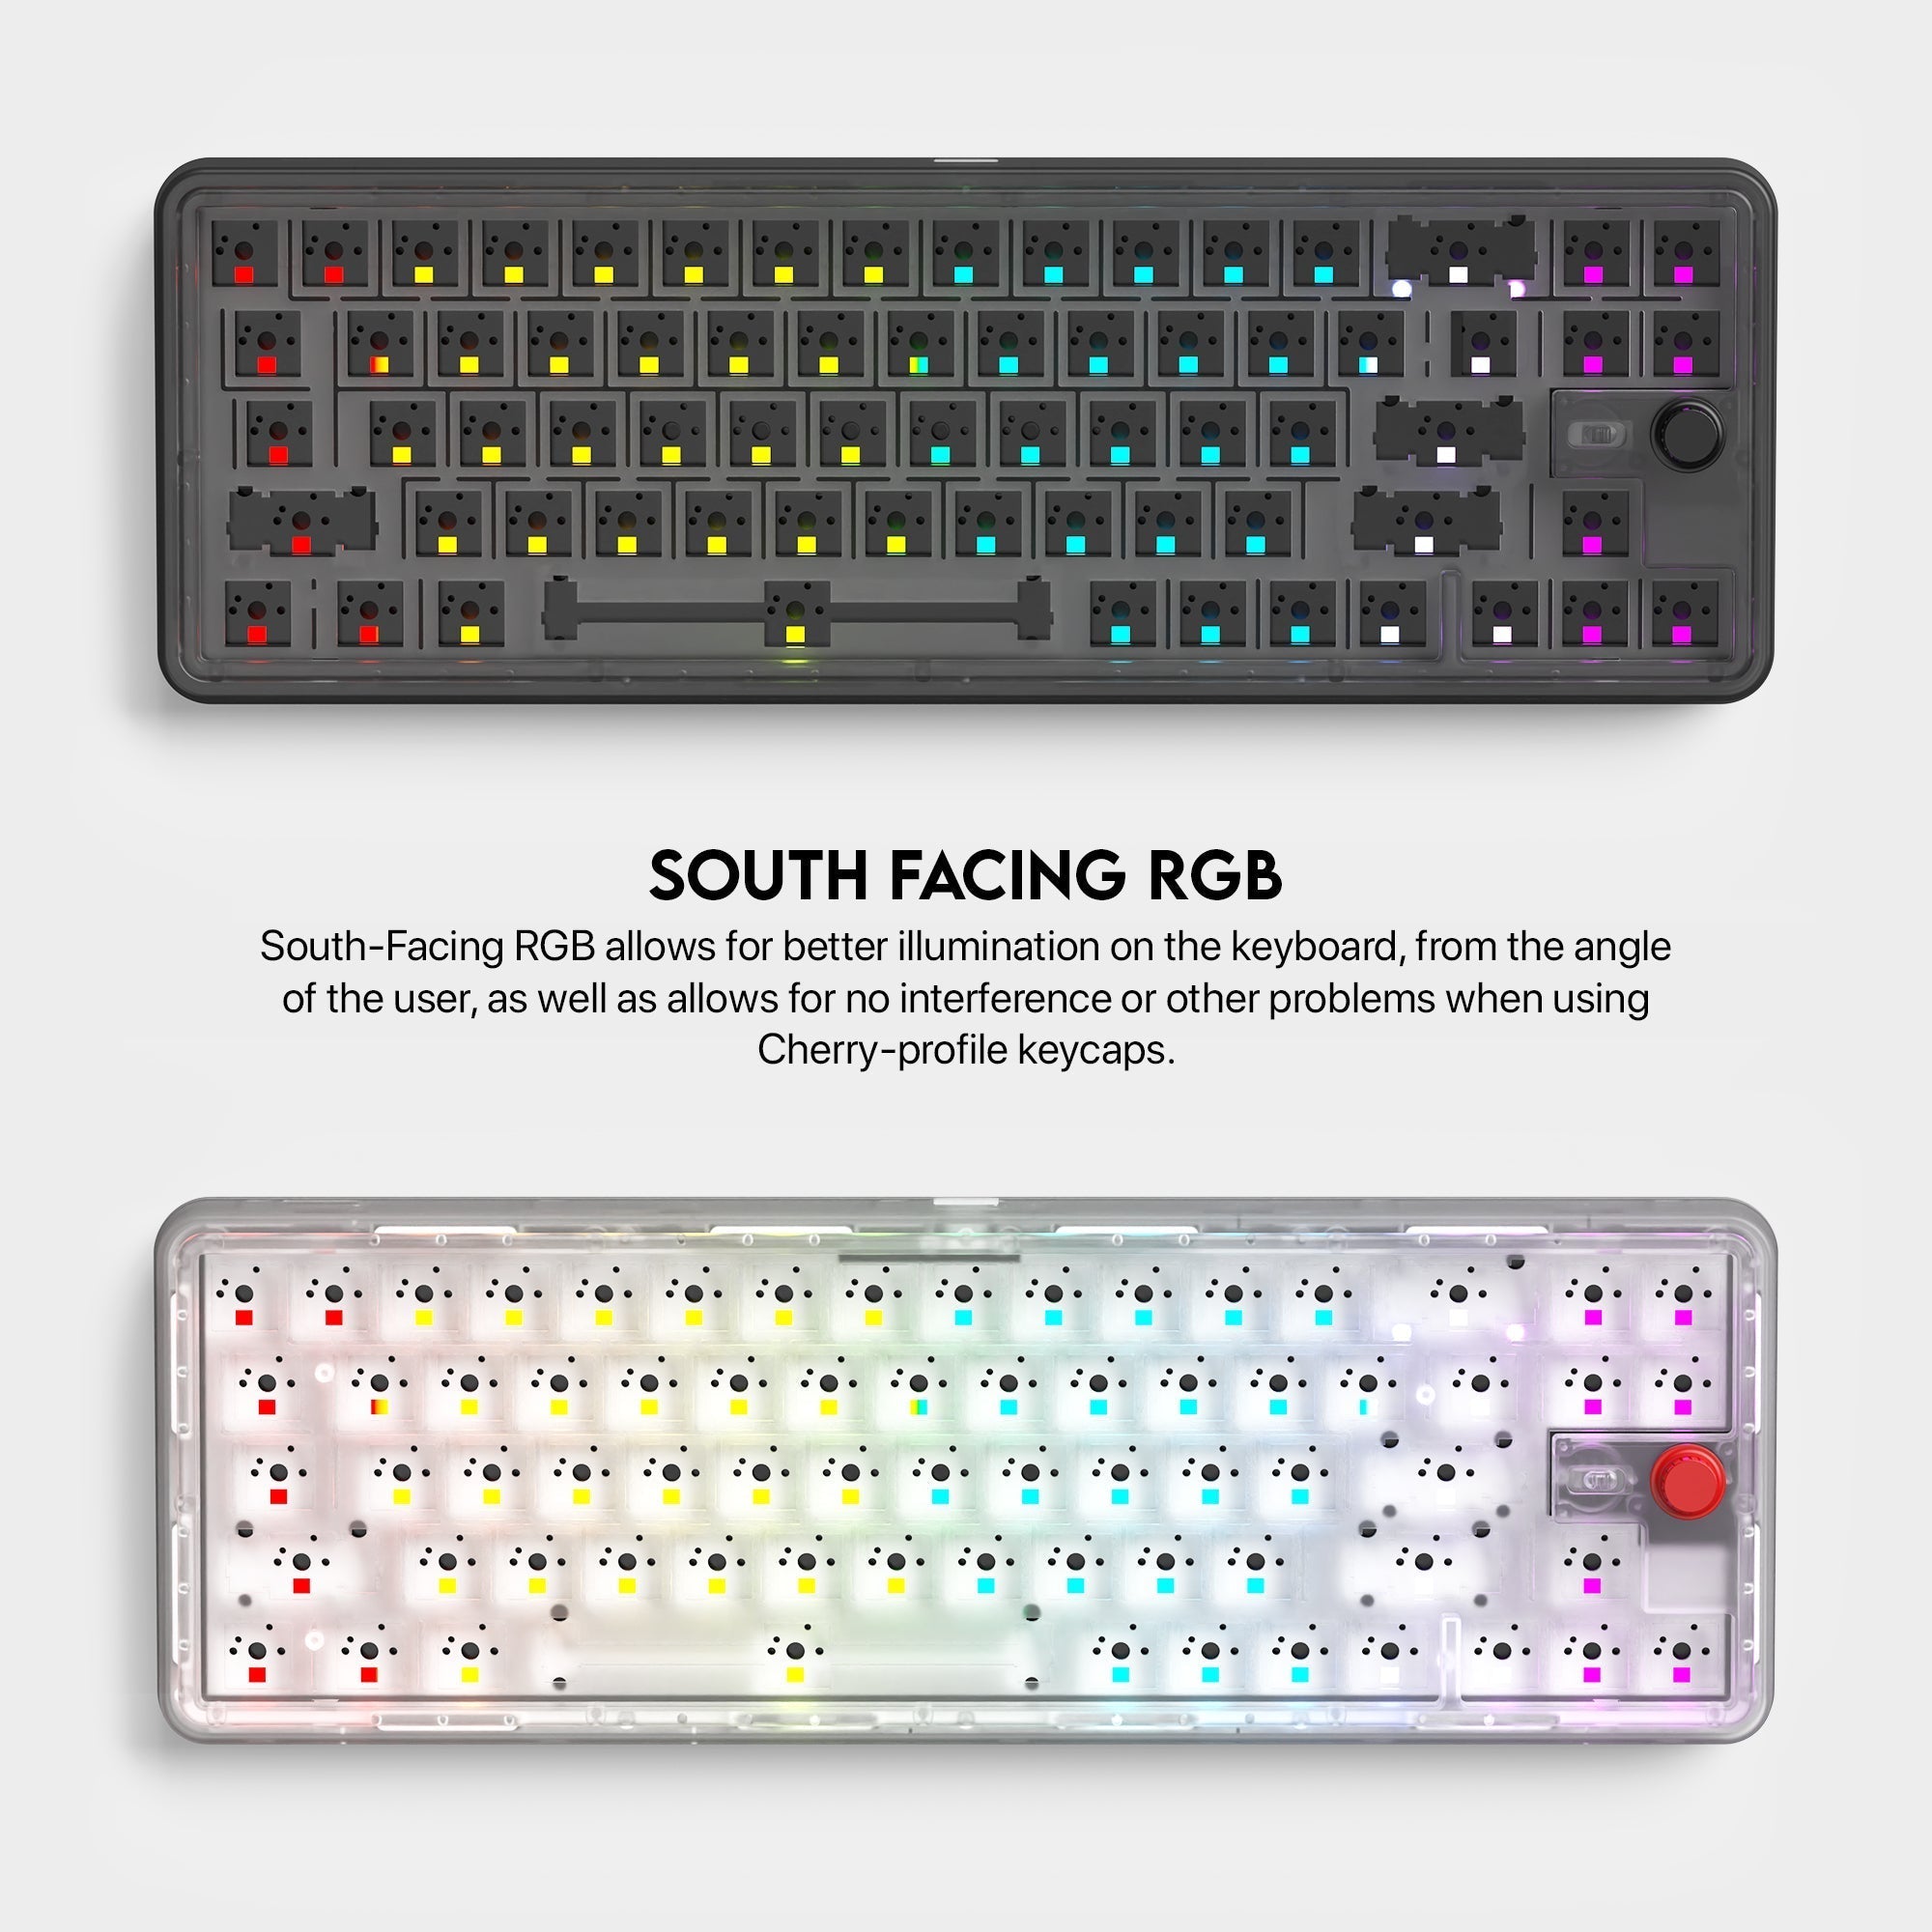 Fantech Maxfit70 MK911 Vibe Edition EPIC GREYSCALE Mechanical Gaming Keyboard